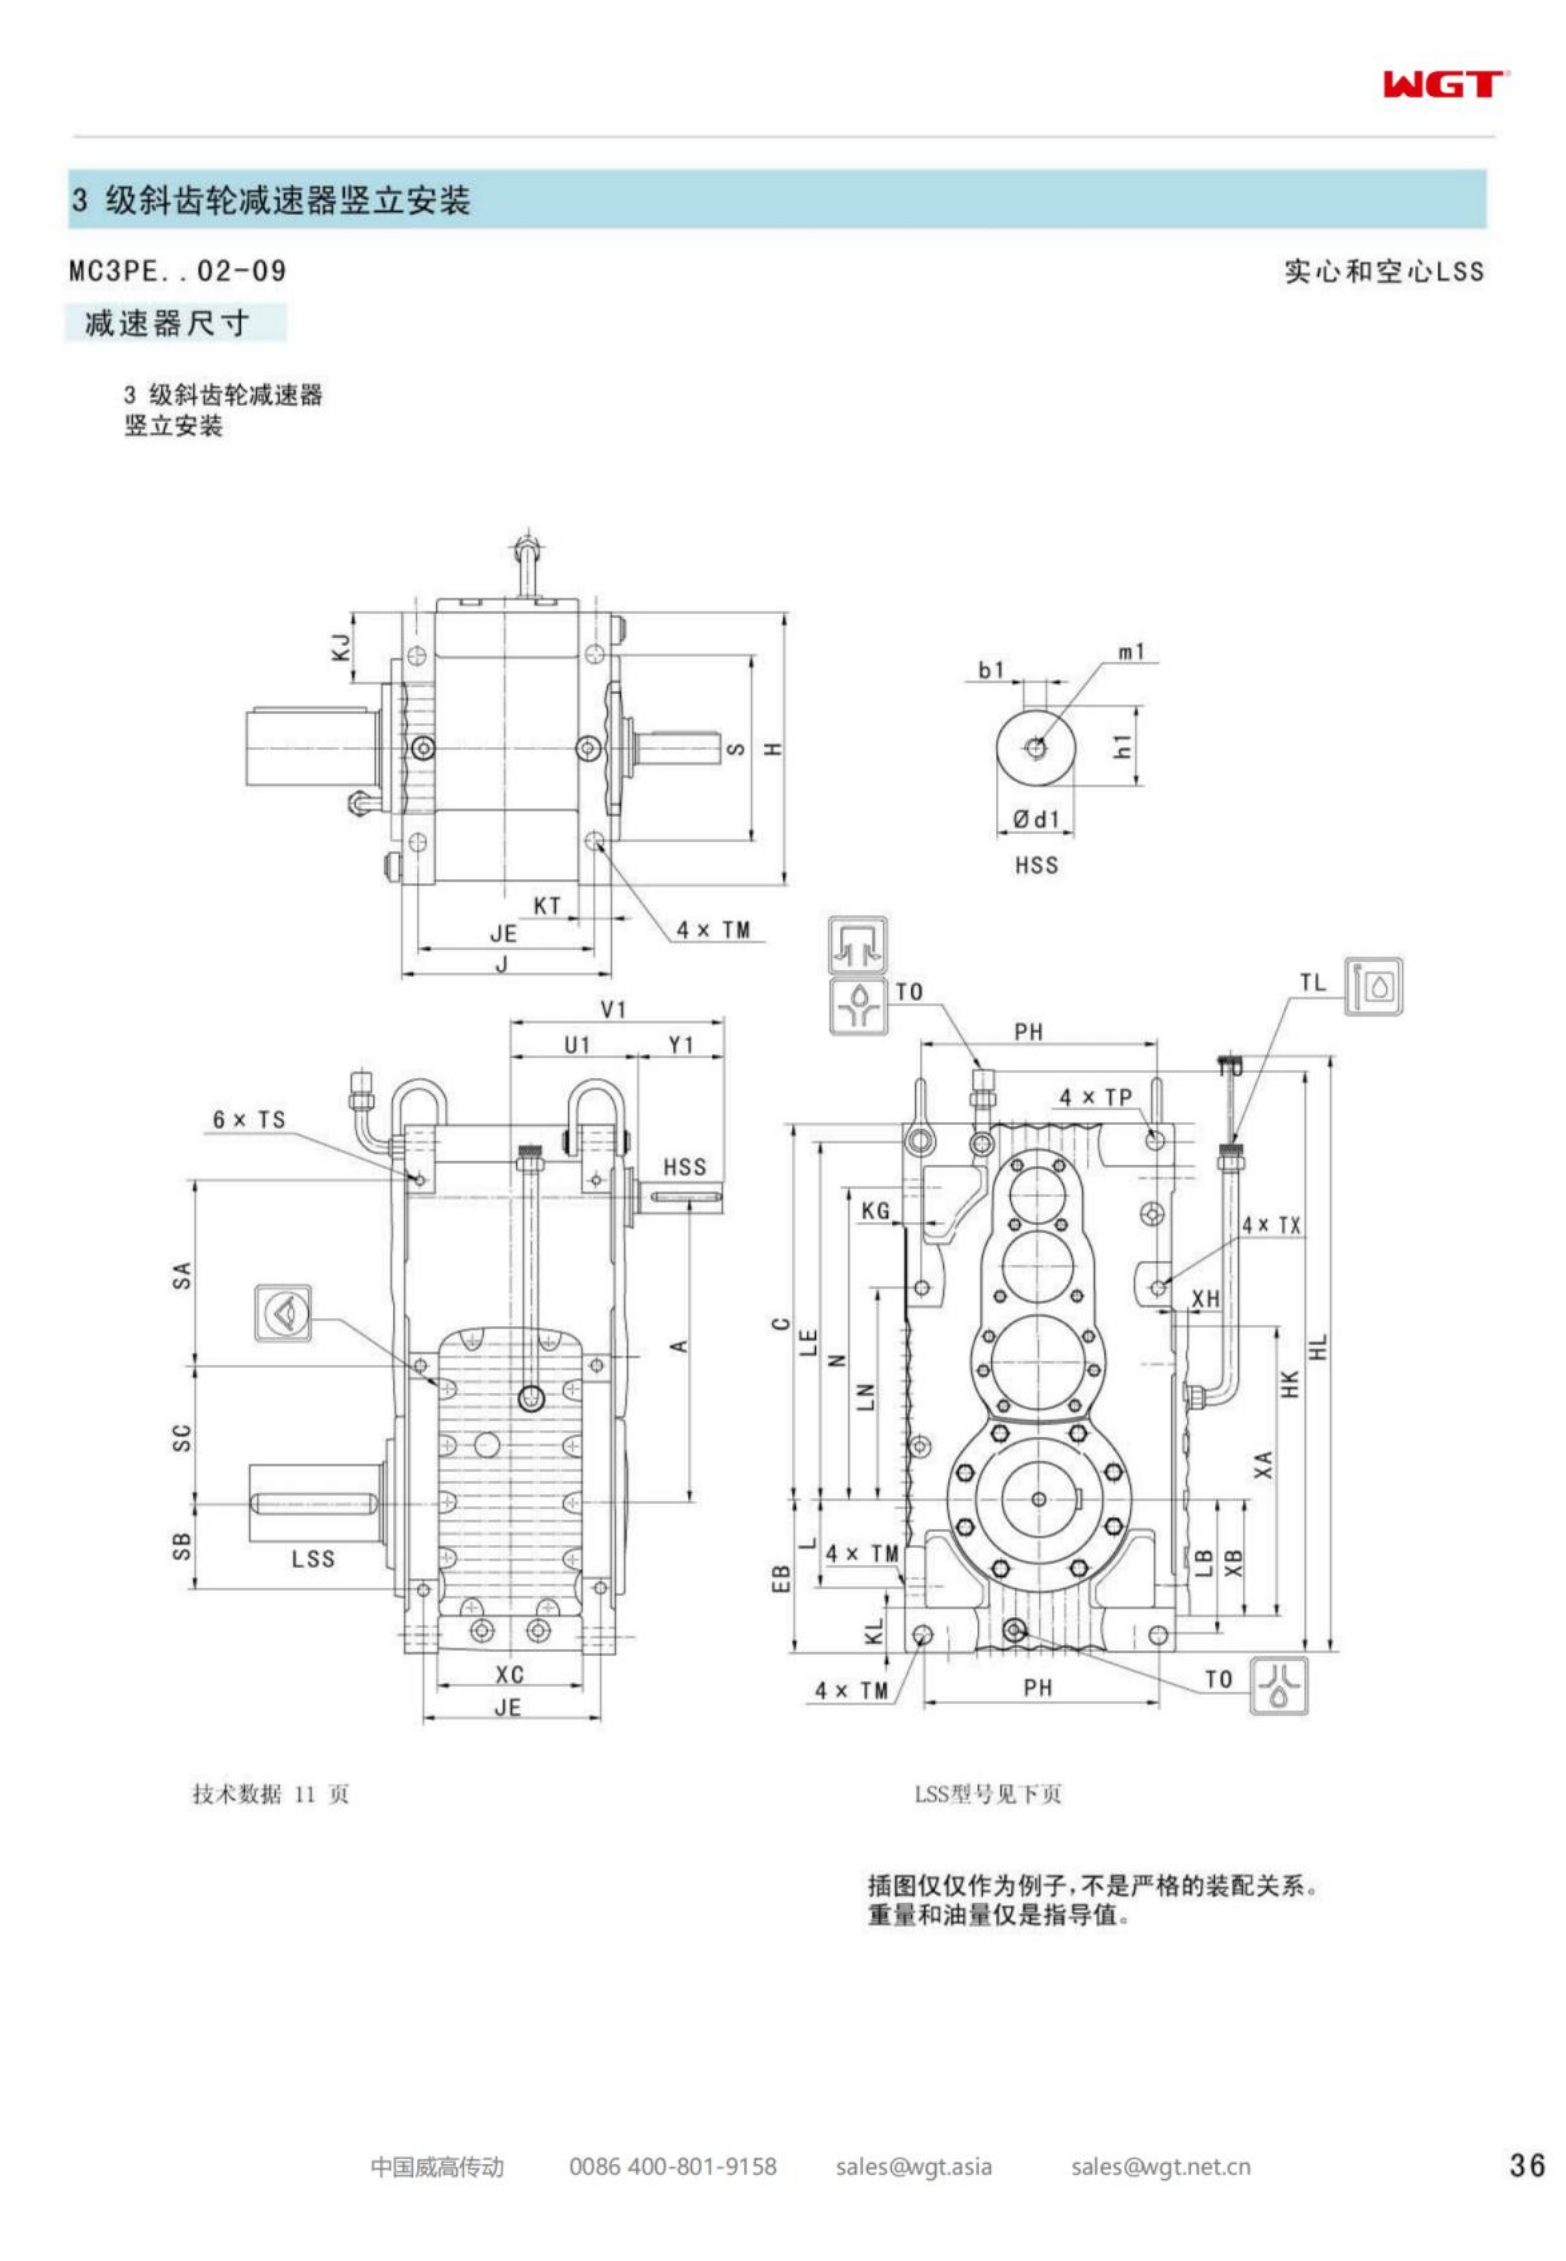 MC3PESF05 replaces _SEW_MC_Series gearbox (patent)